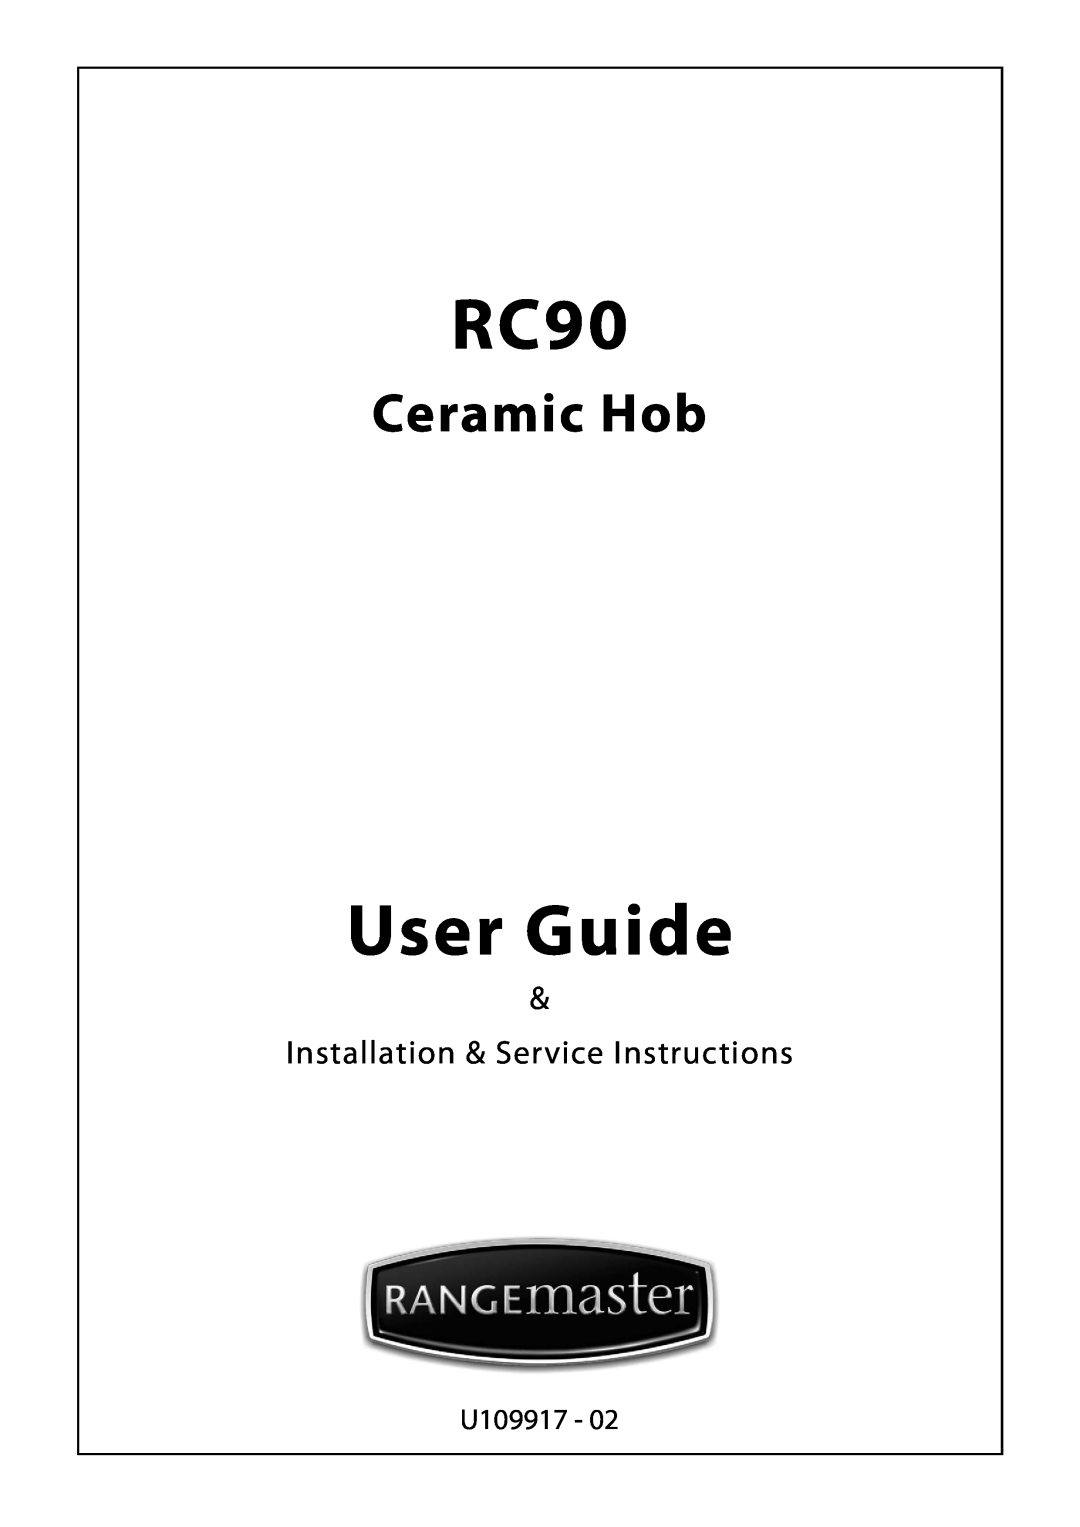 Rangemaster RC90 manual User Guide, Ceramic Hob, Installation & Service Instructions, U109917 